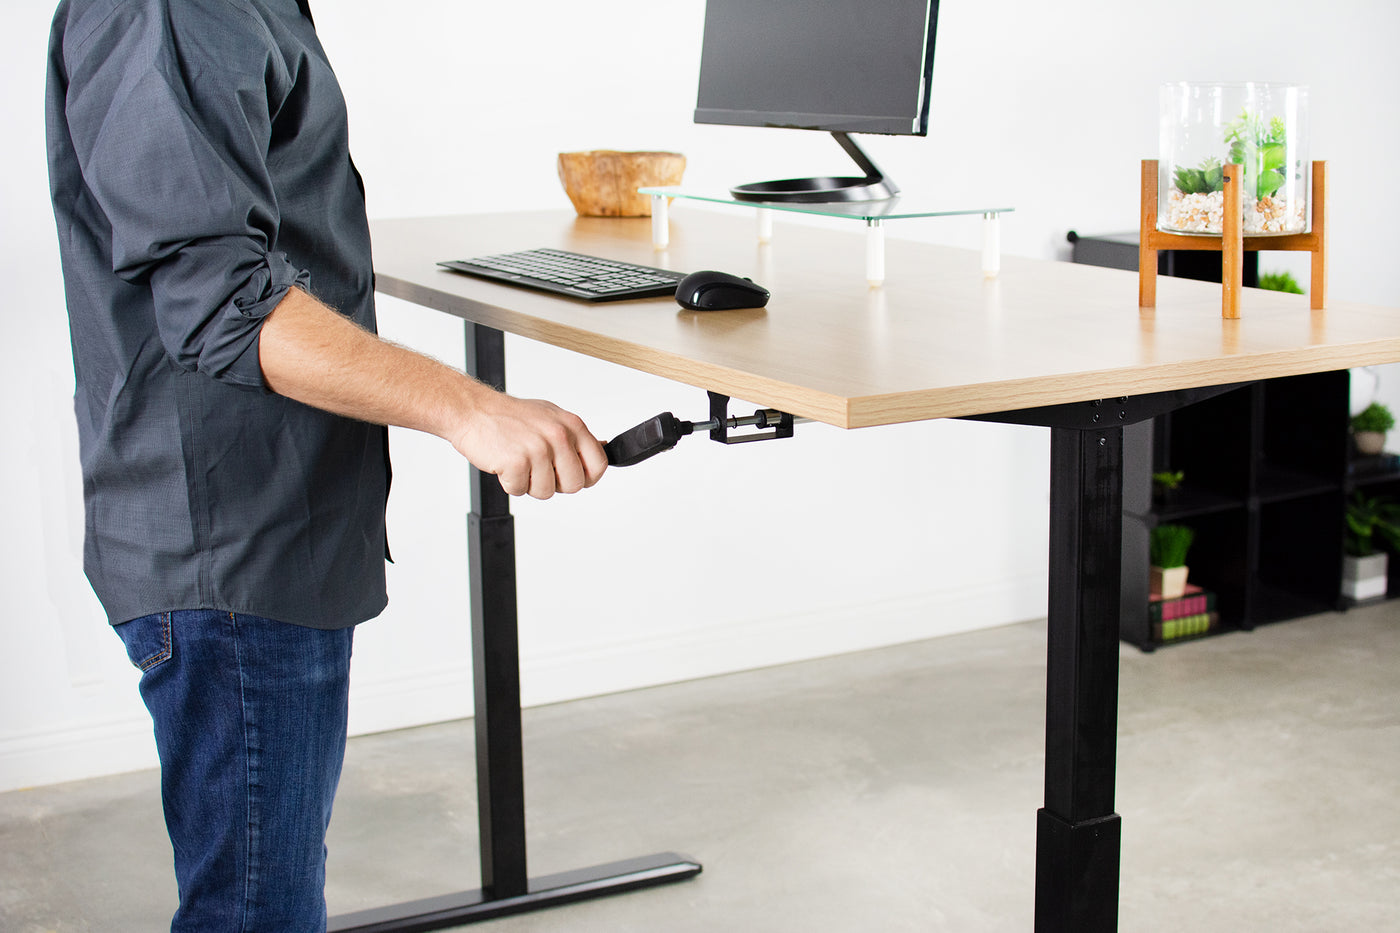 Sturdy manual hand crank height adjustable desk frame.